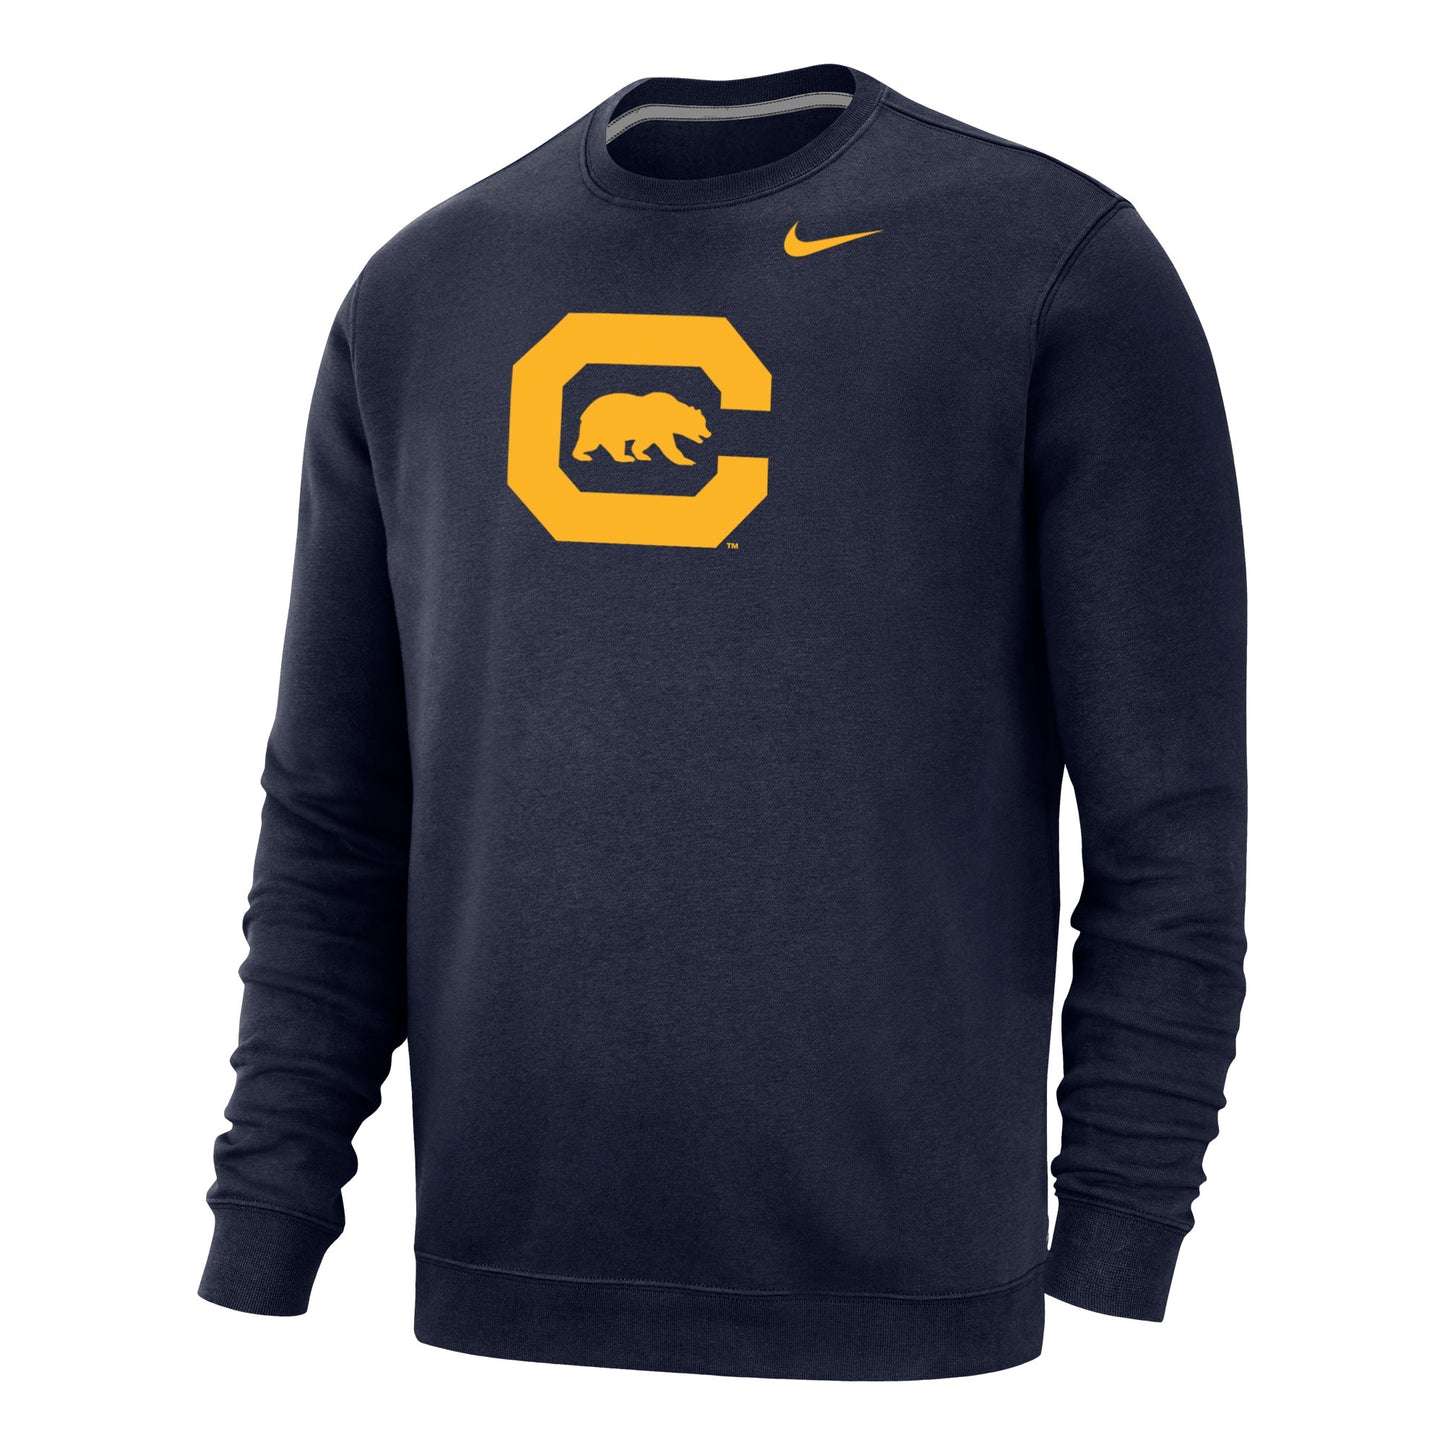 U.C. Berkeley Cal Nike crew-neck with block C and Bear logo-Navy-Shop College Wear